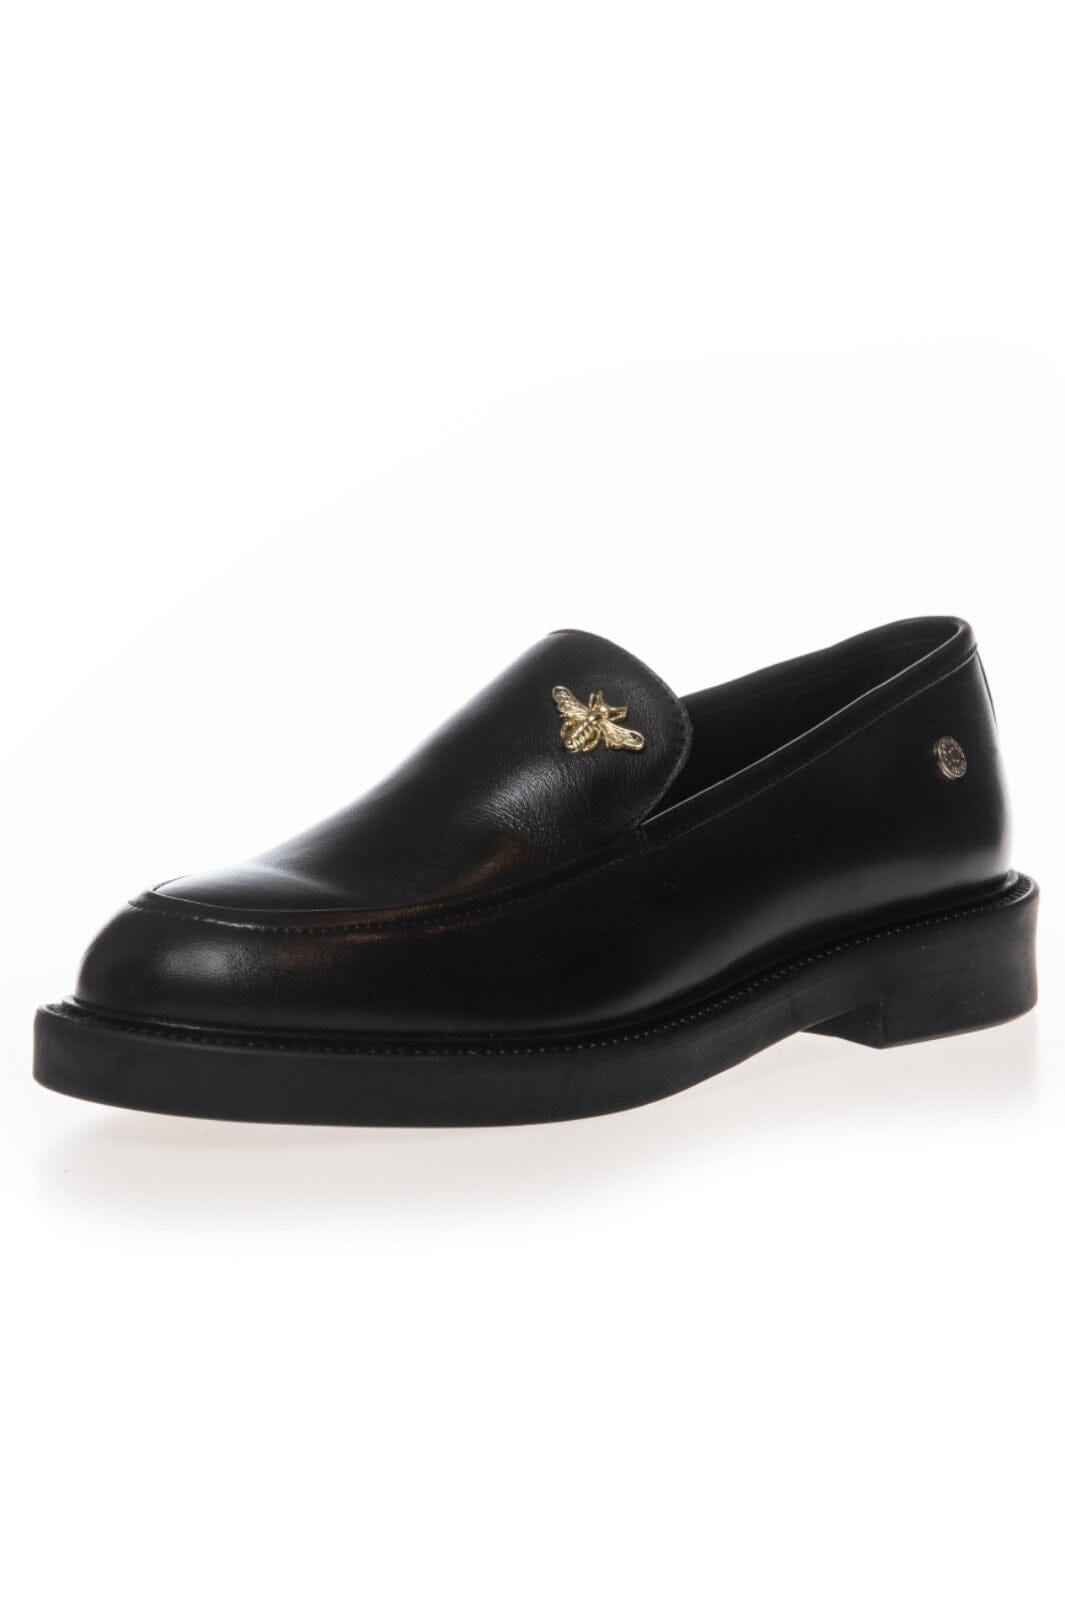 Copenhagen Shoes - Let'S Walk - 0001 Black Loafers 